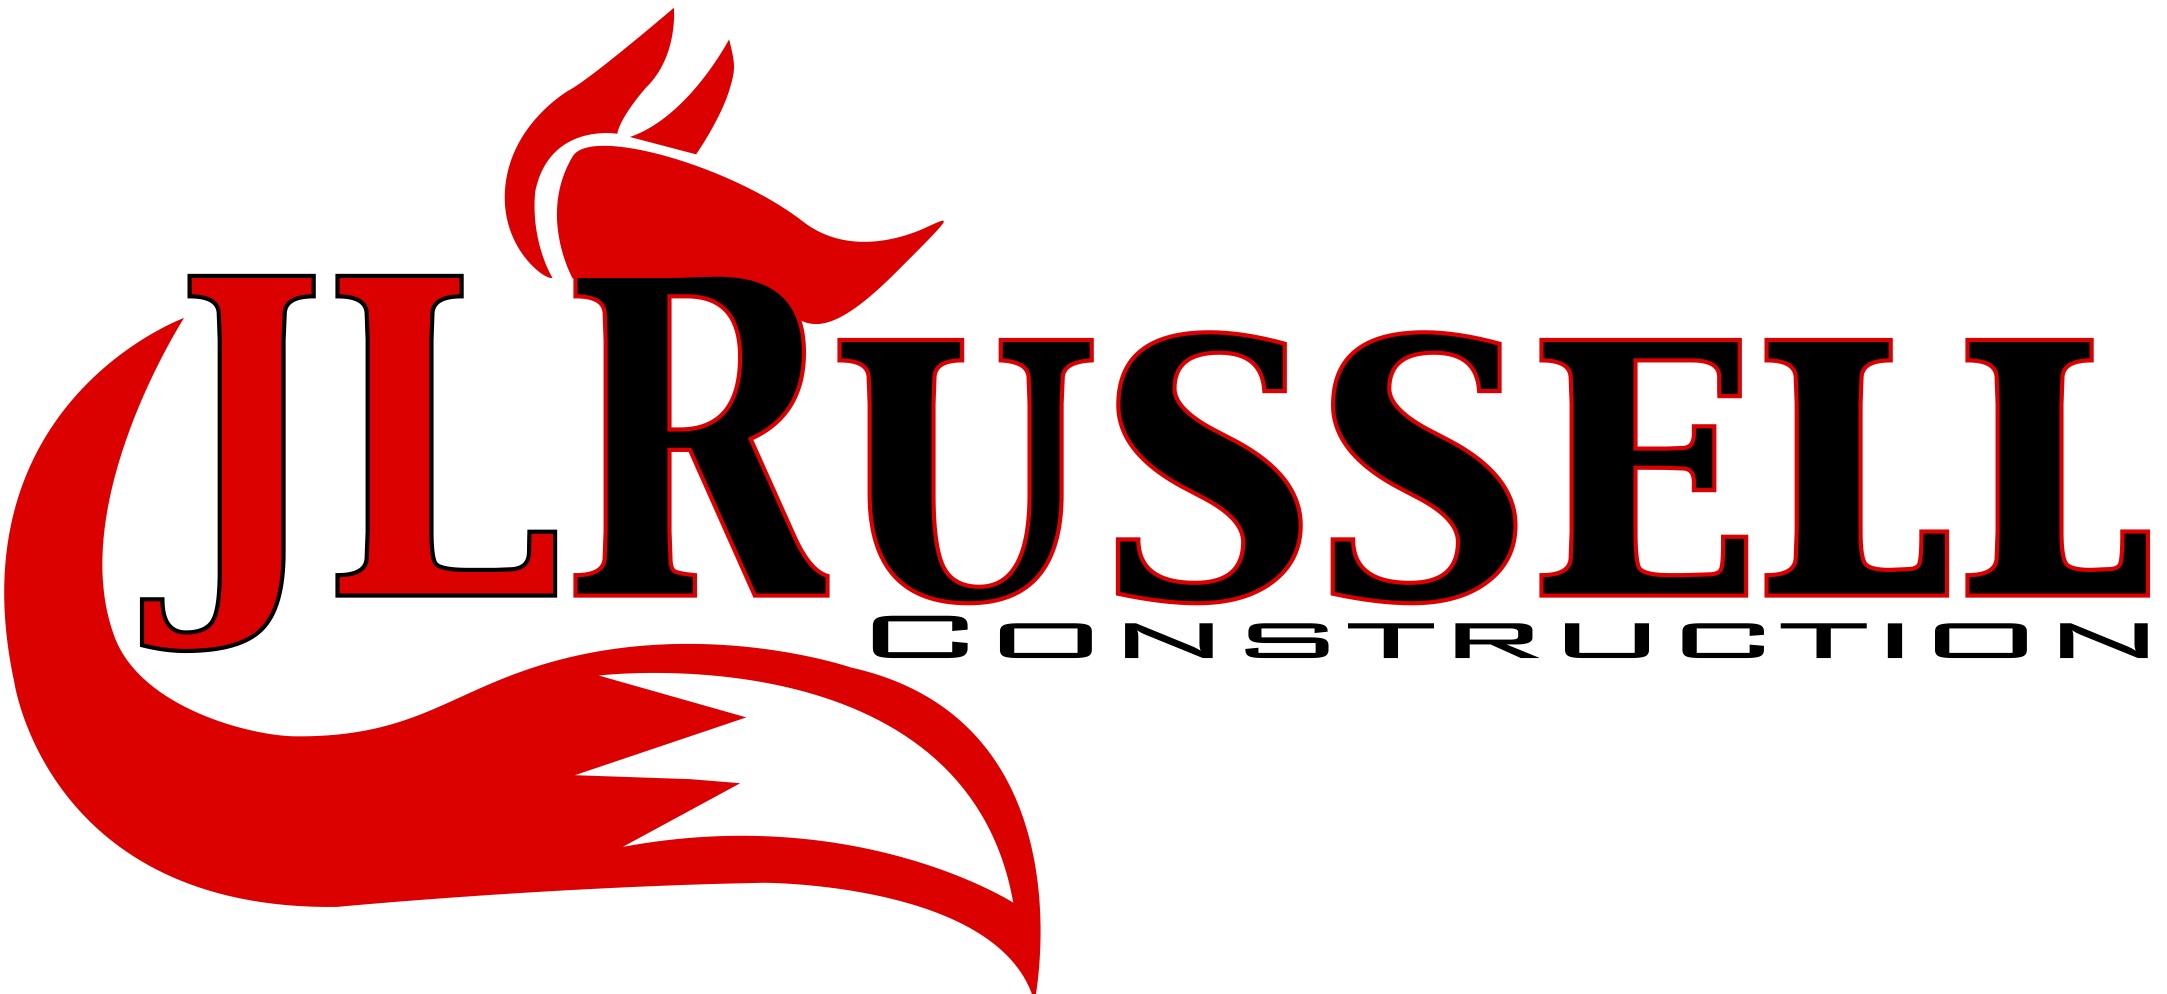 JL Russell Construction